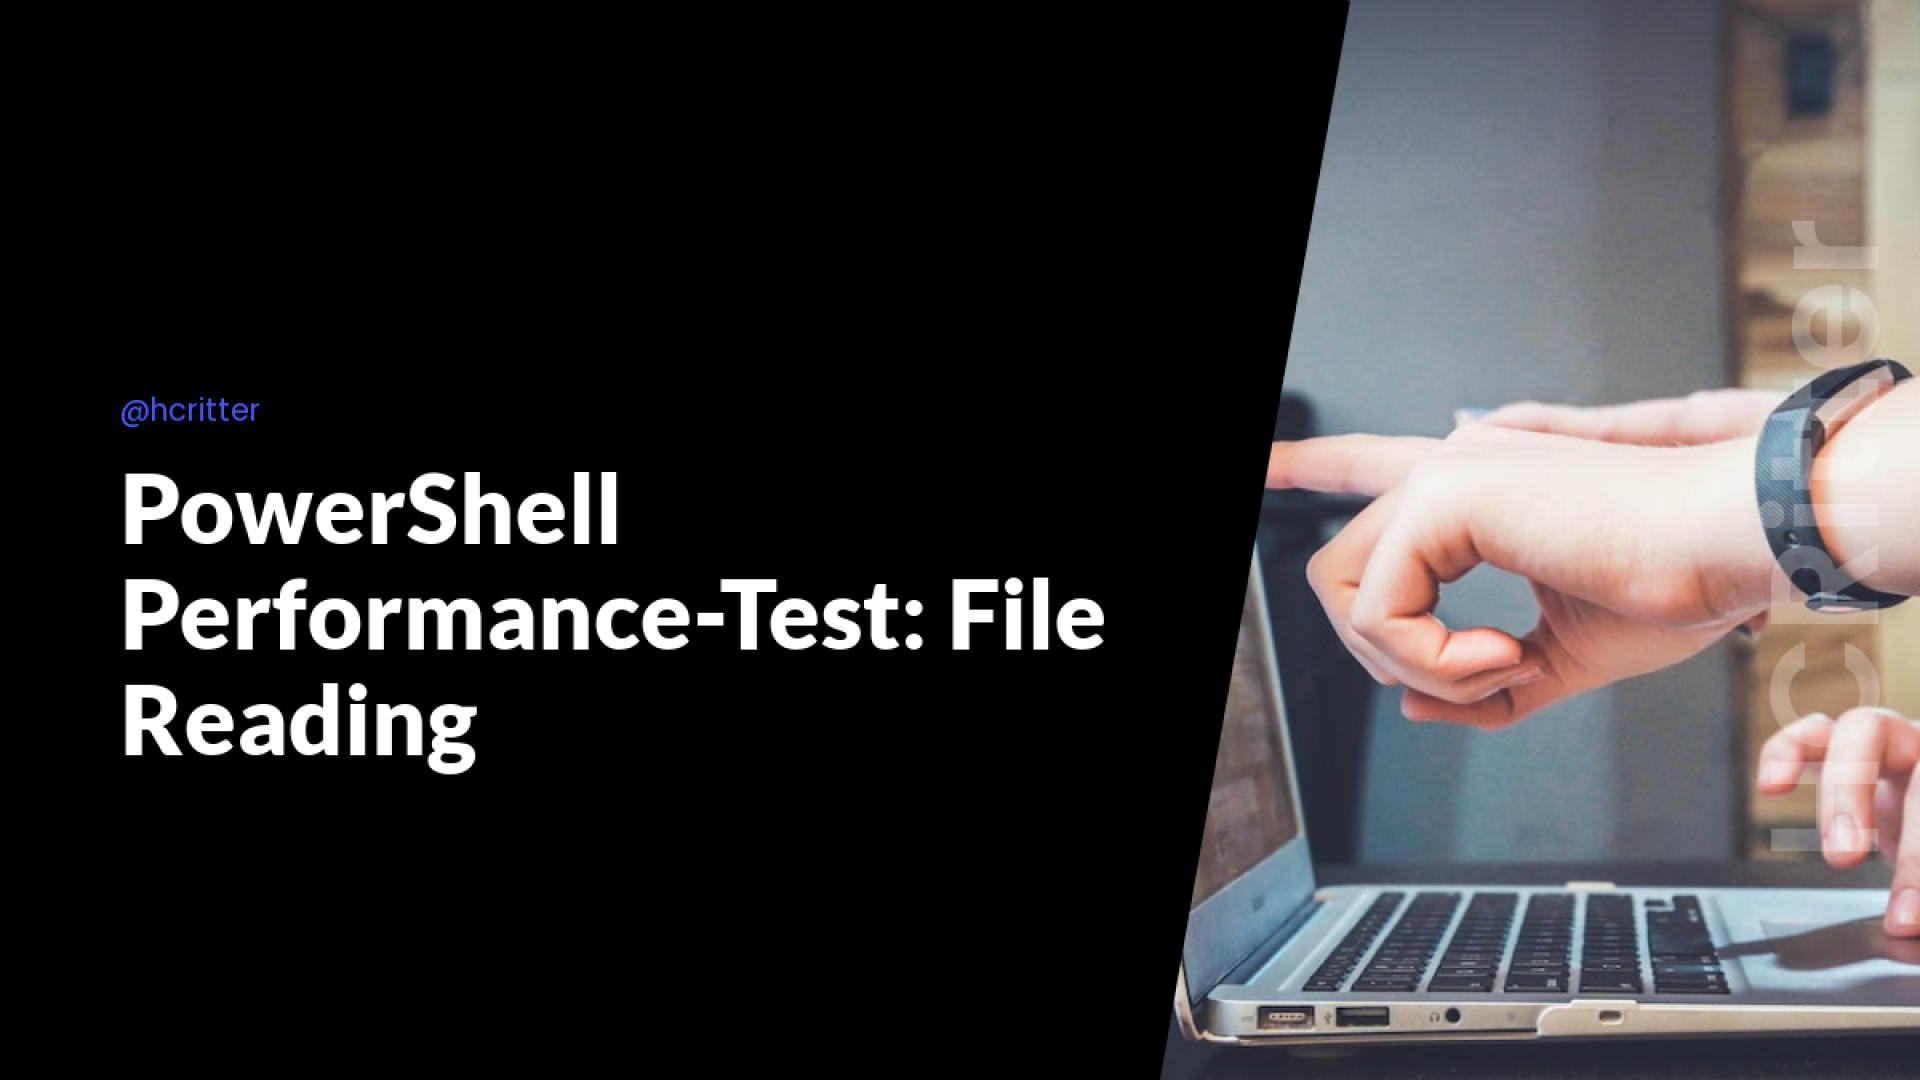 PowerShell Performance-Test: File Reading